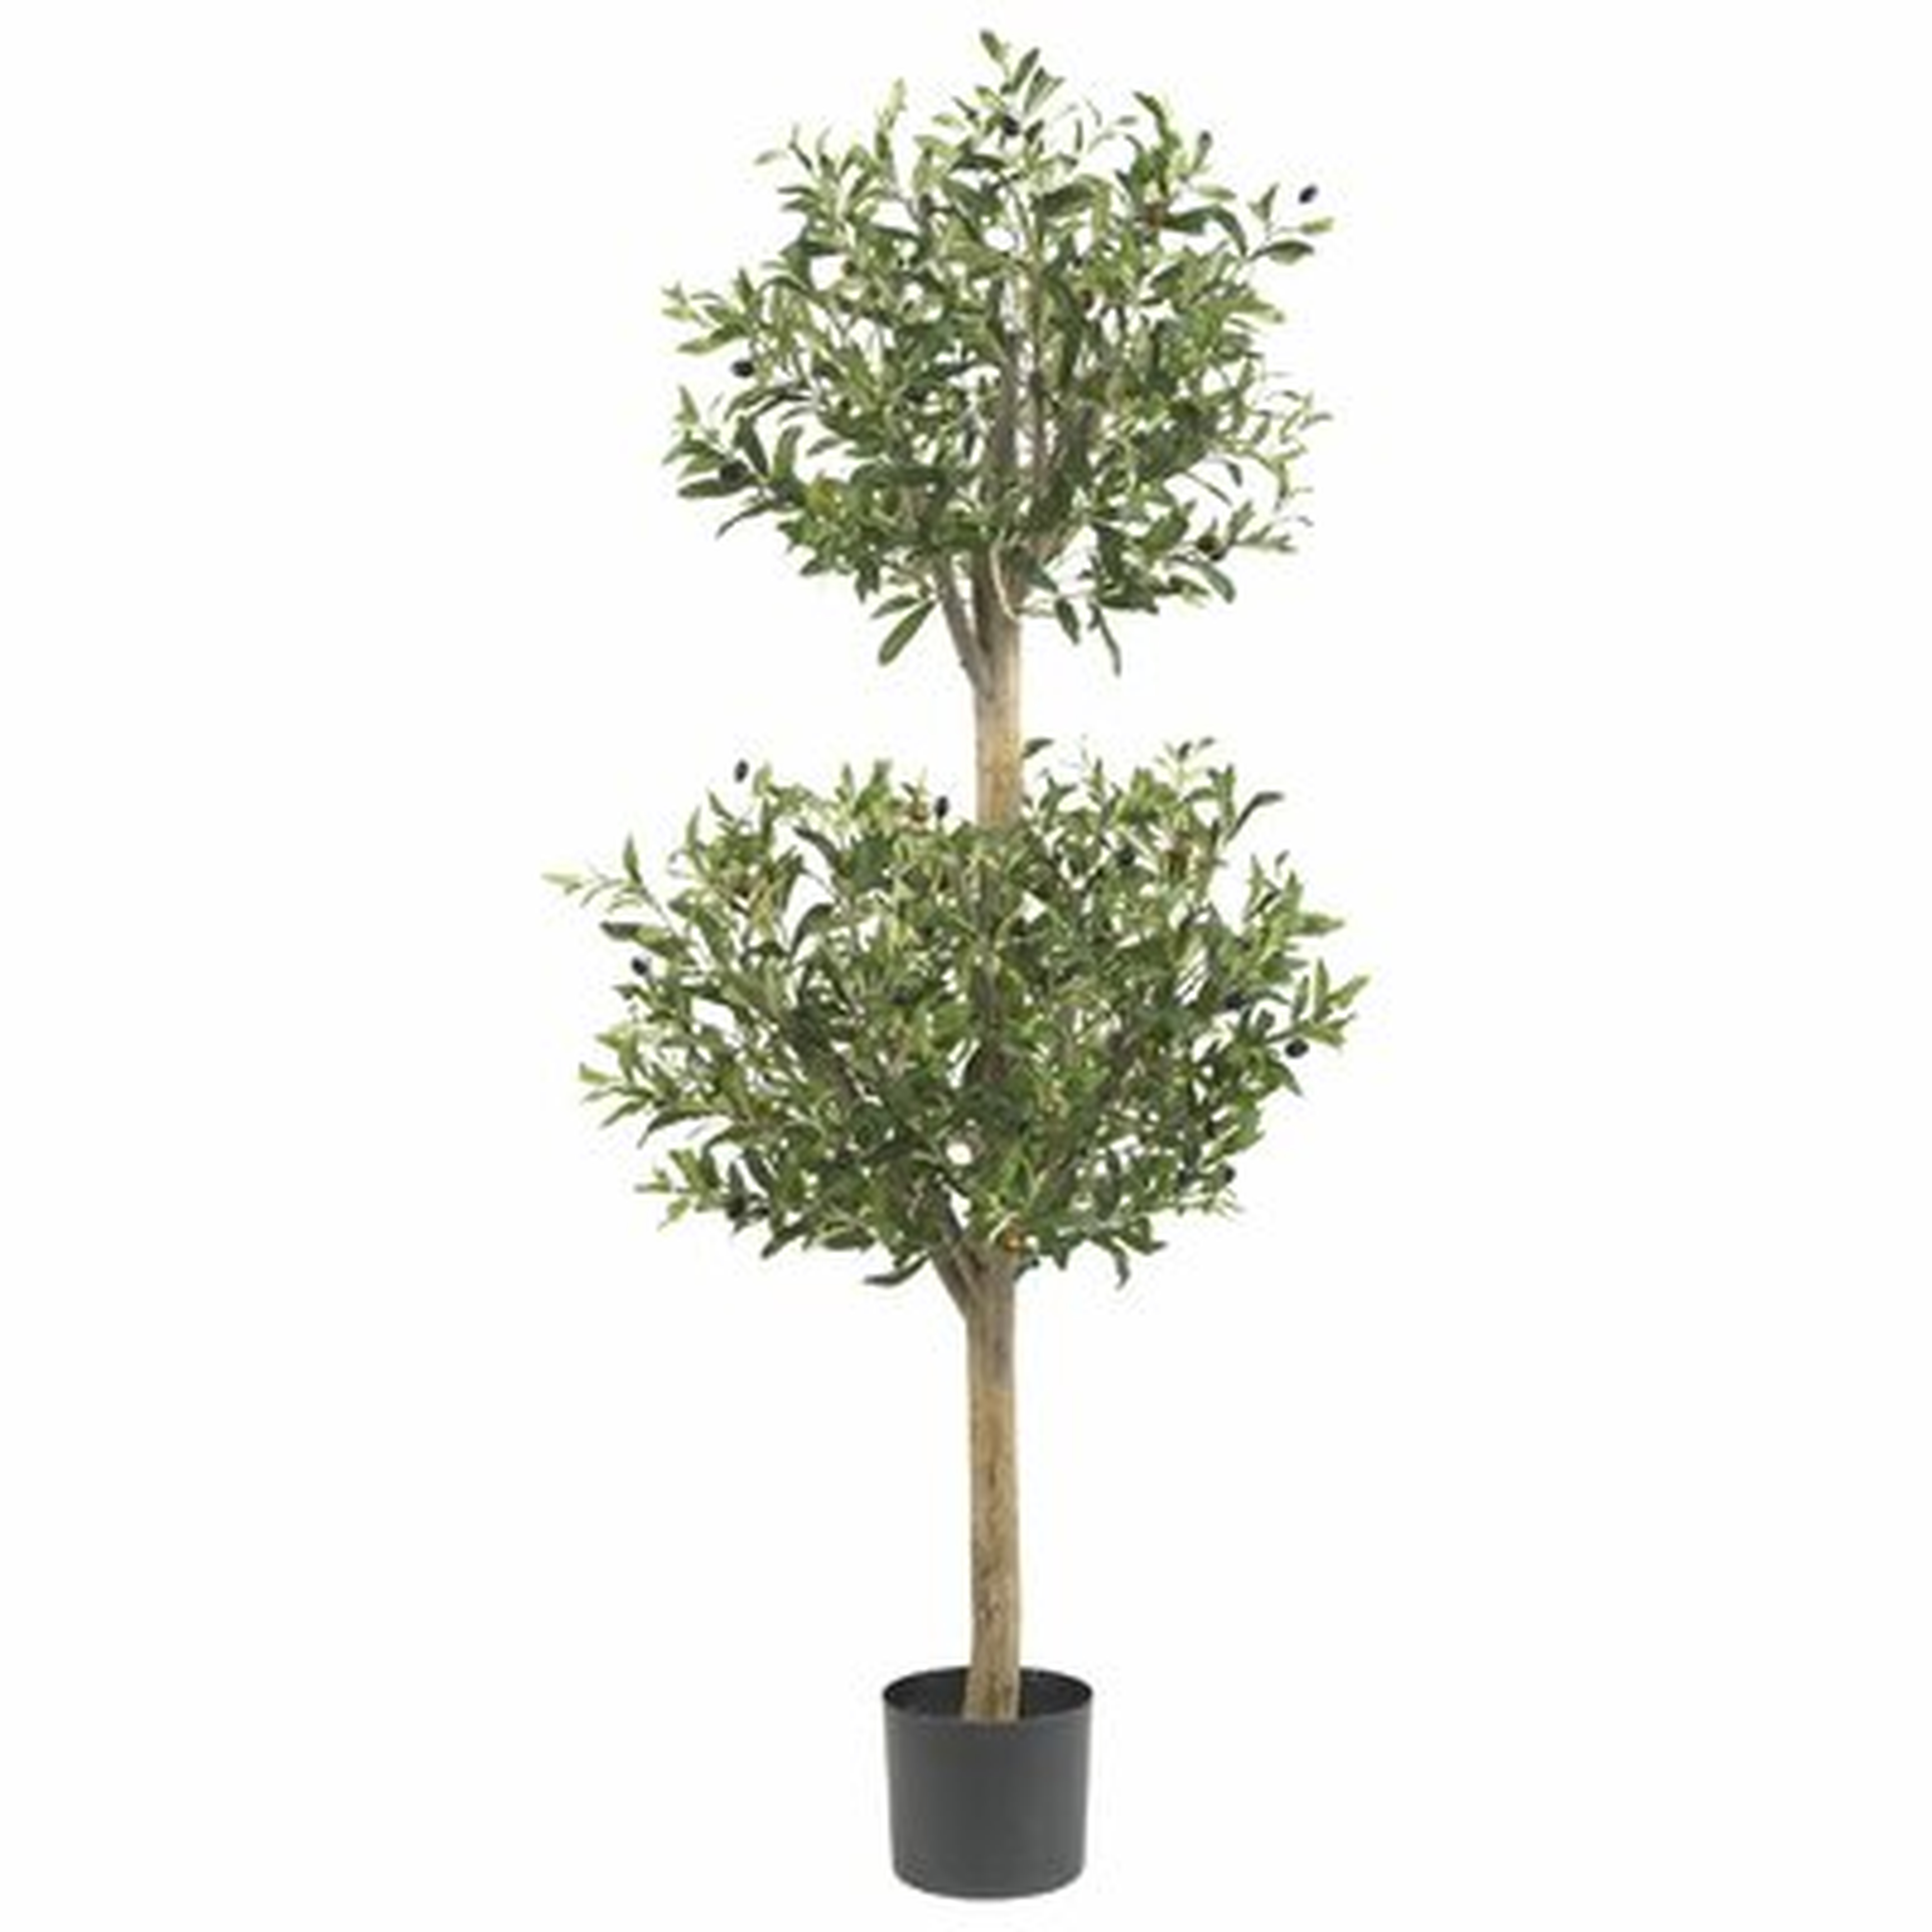 54" Artificial Olive Tree Topiary in Pot - Wayfair